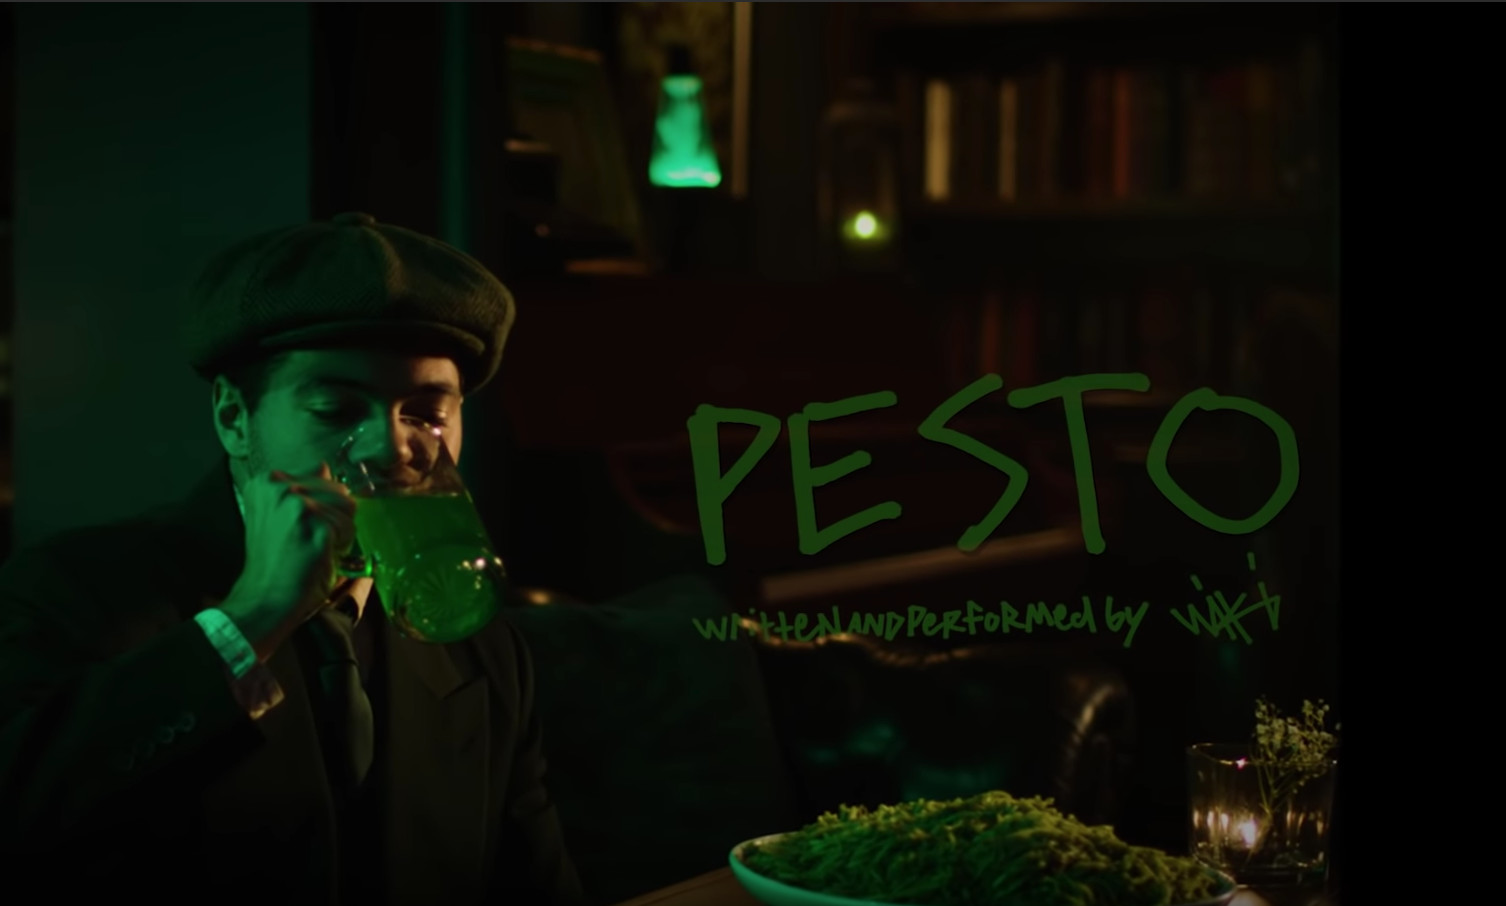 Check Out Wiki’s New Single “Pesto”